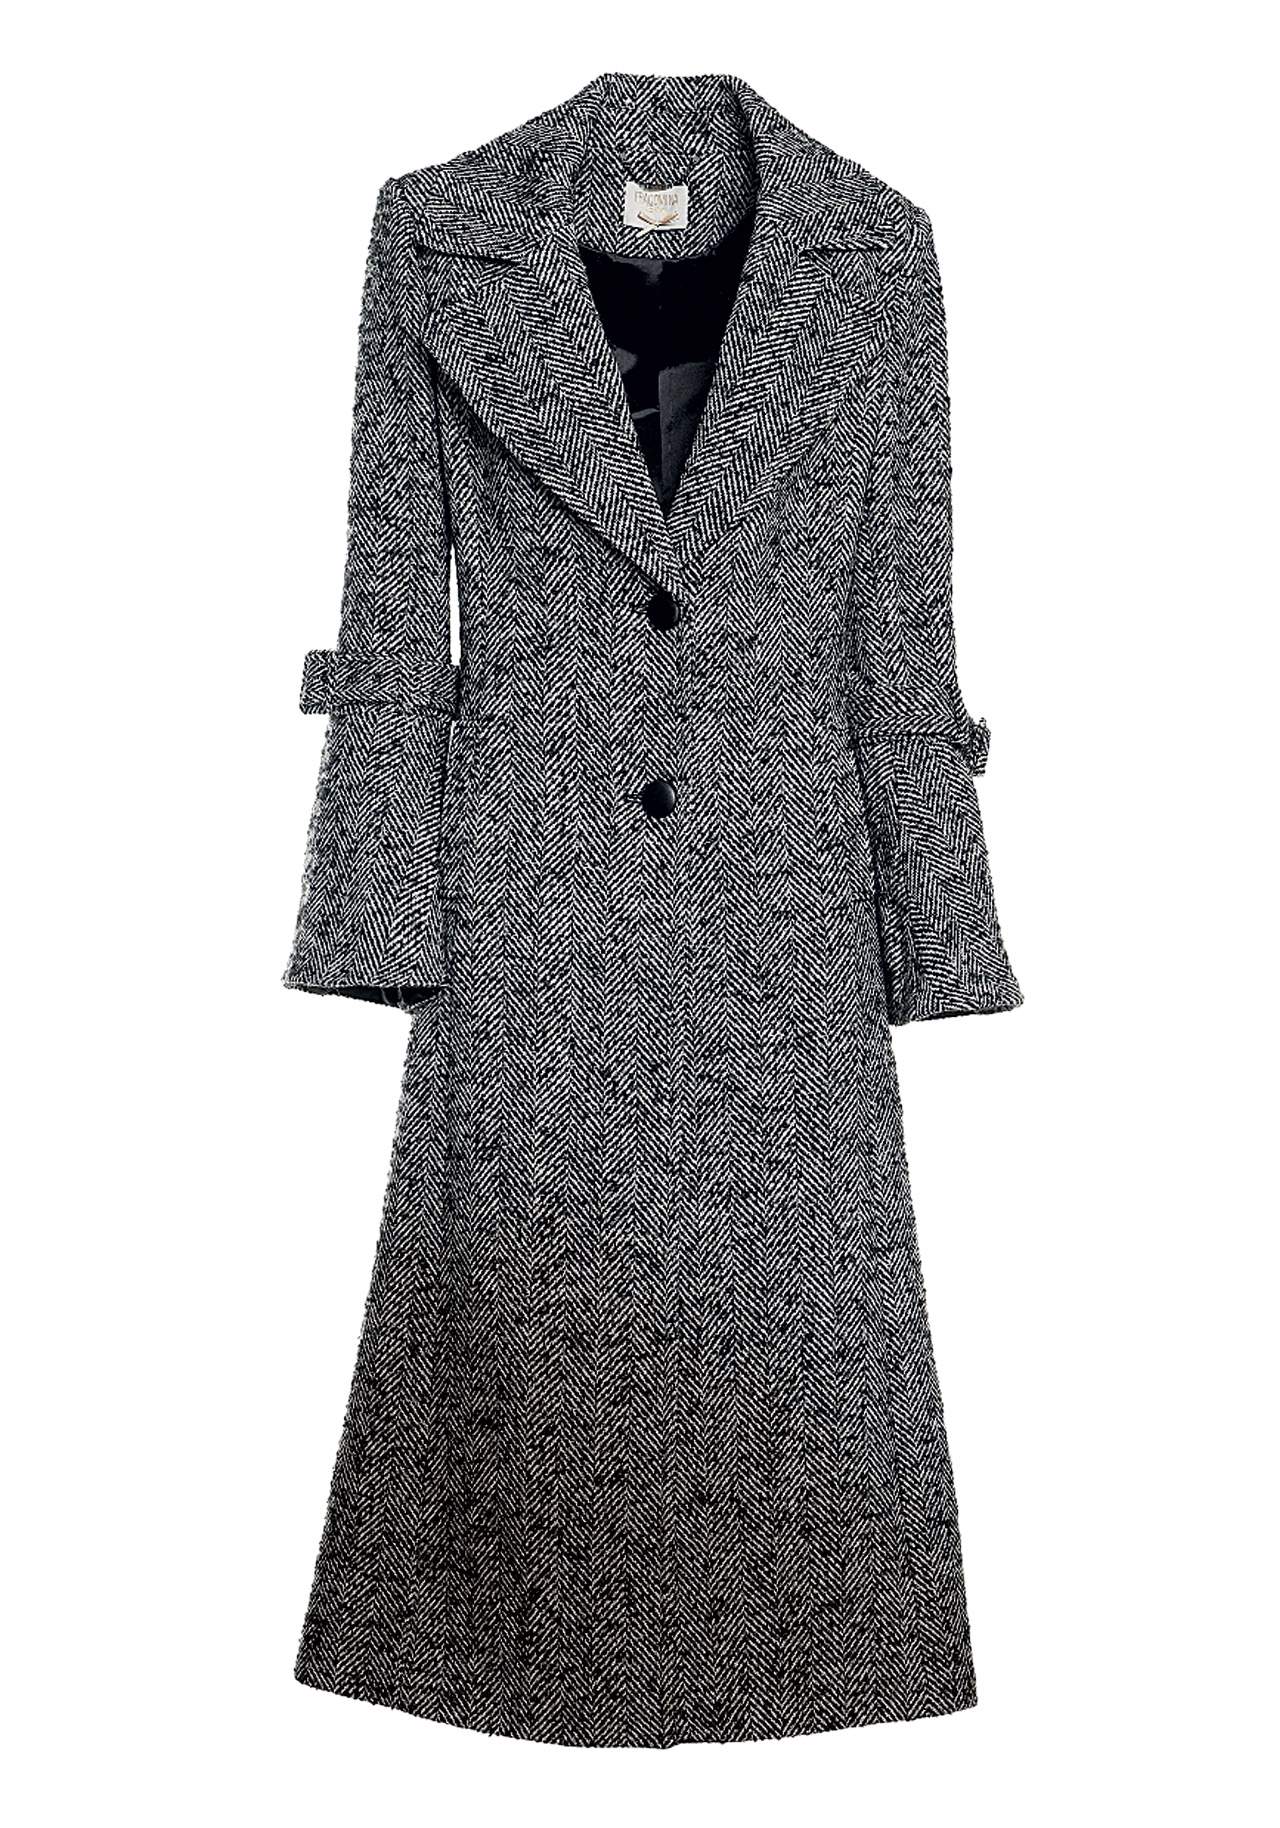 El abrigo entallado abrigos gustosos Acampanado, de FRACOMINA, 277,90€